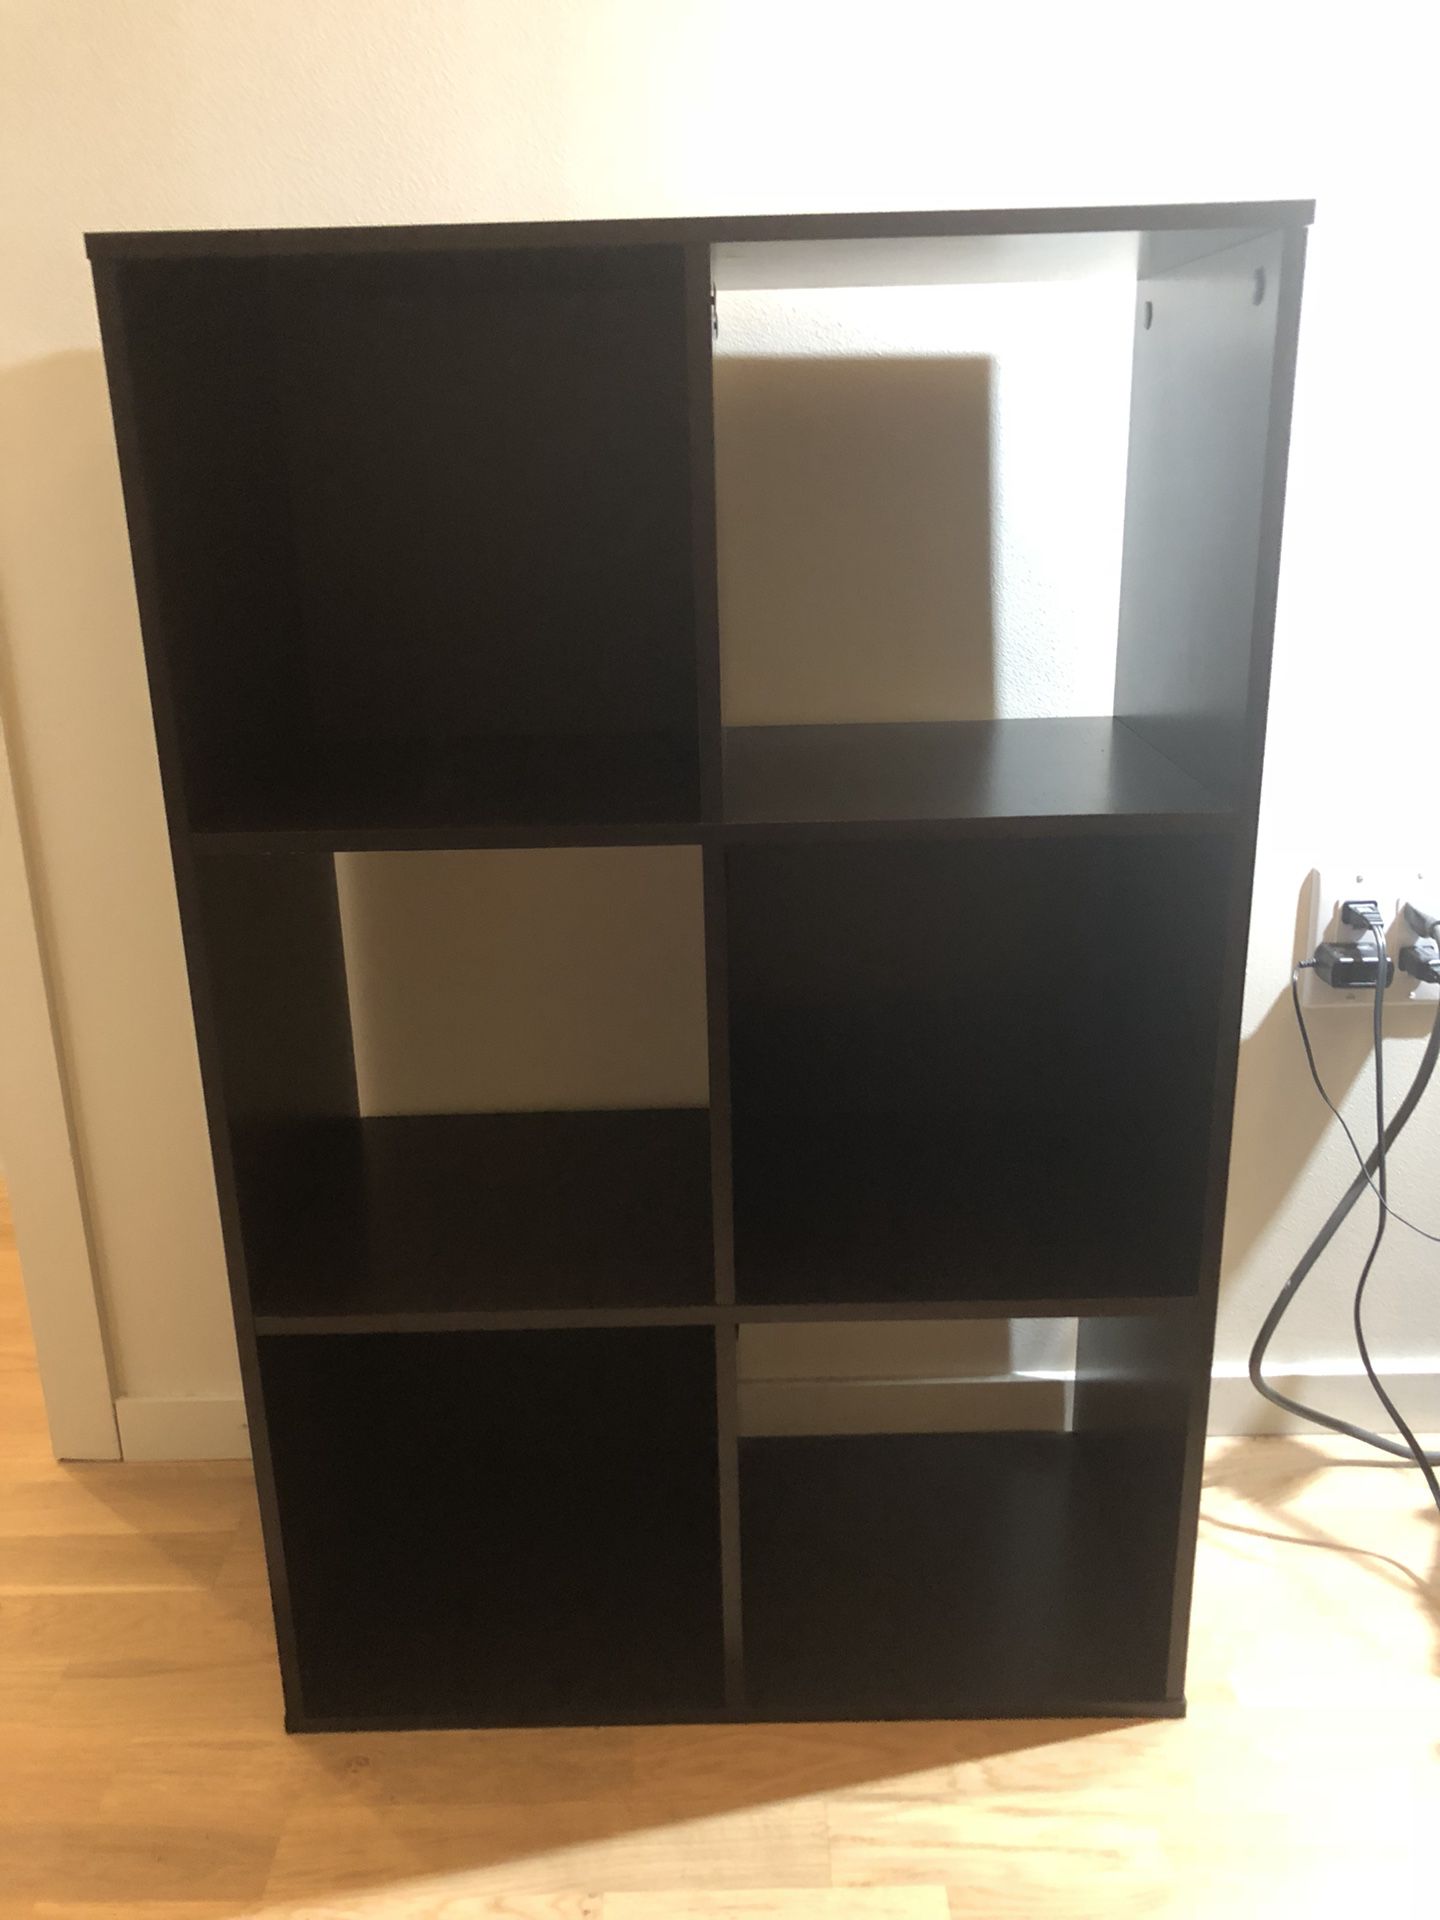 Bookshelf/cube organizer